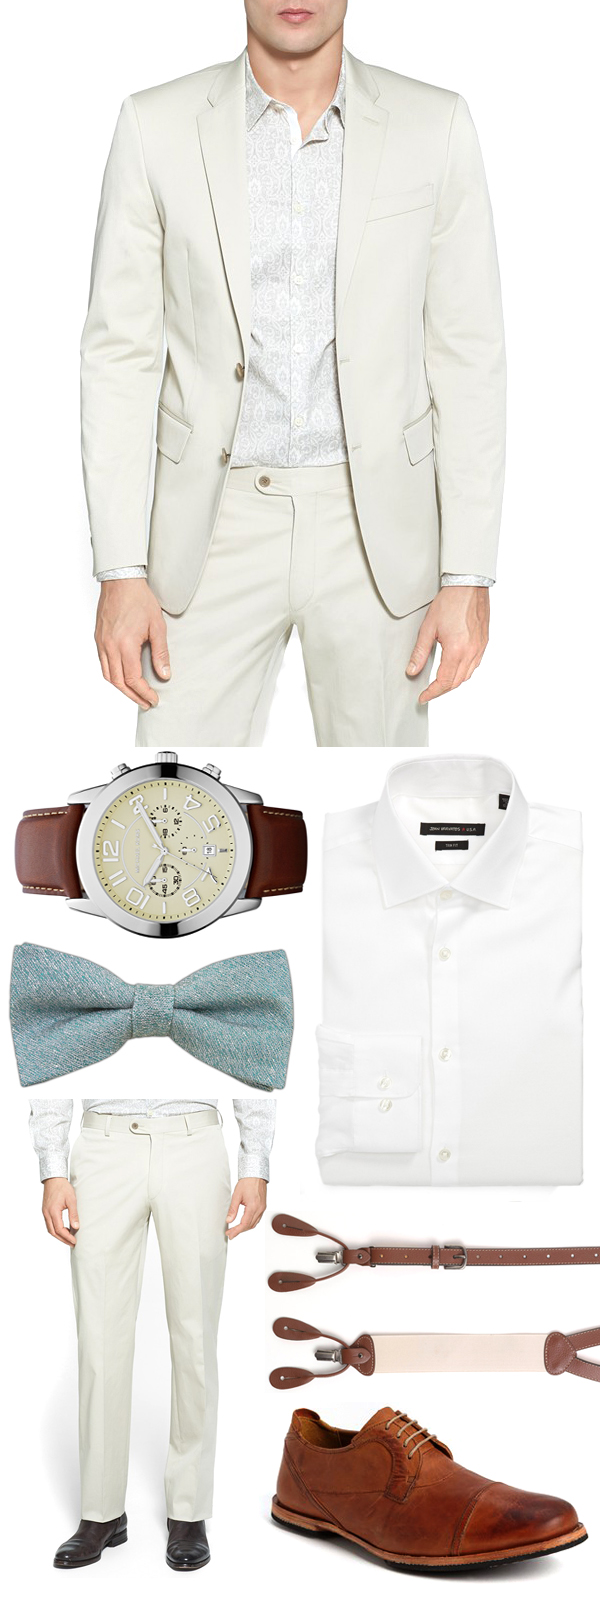 men's fashion inspiration for the modern groom | via junebugweddings.com